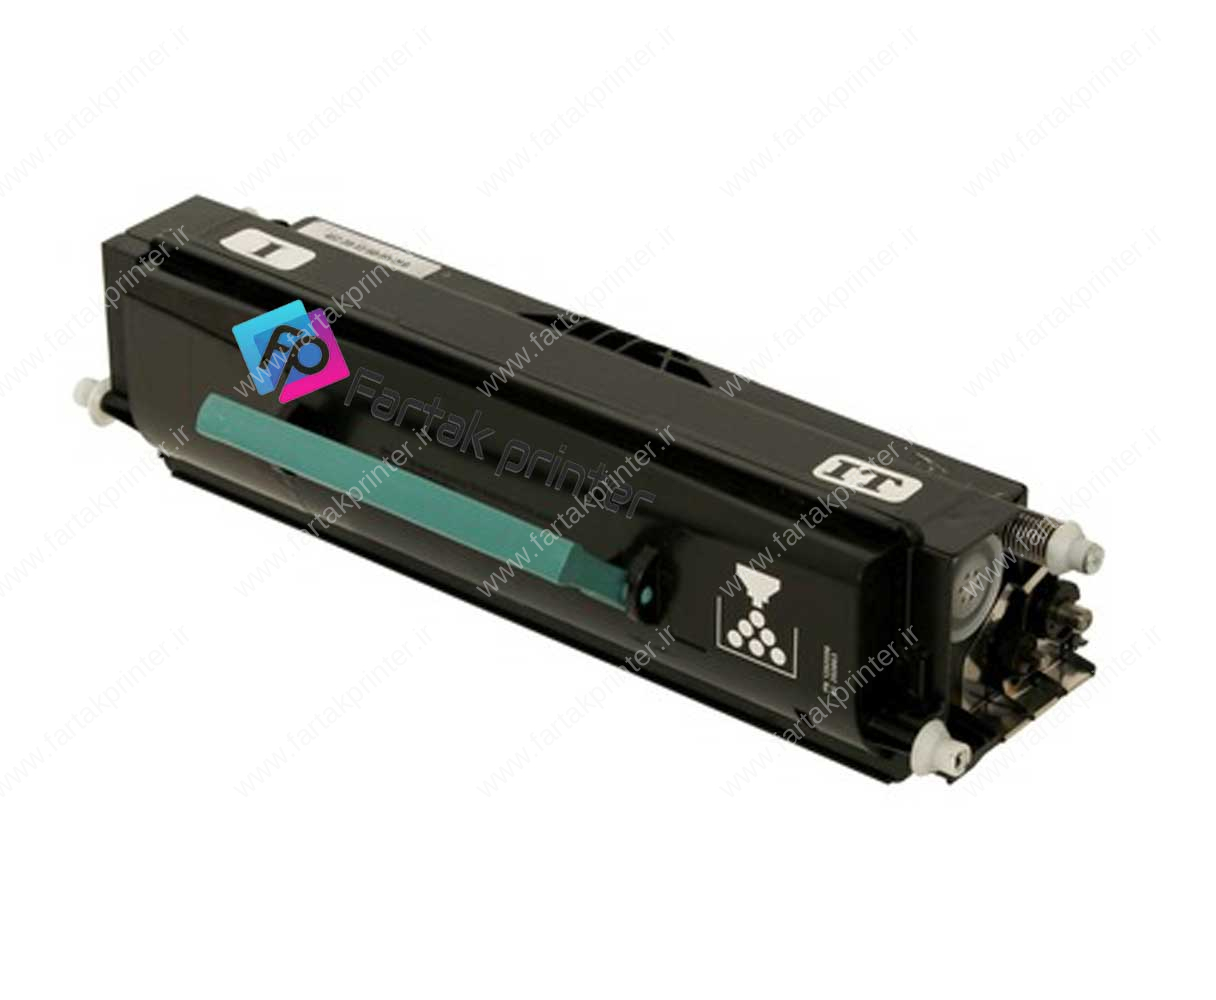 Lexmark E340 Toner Cartridge